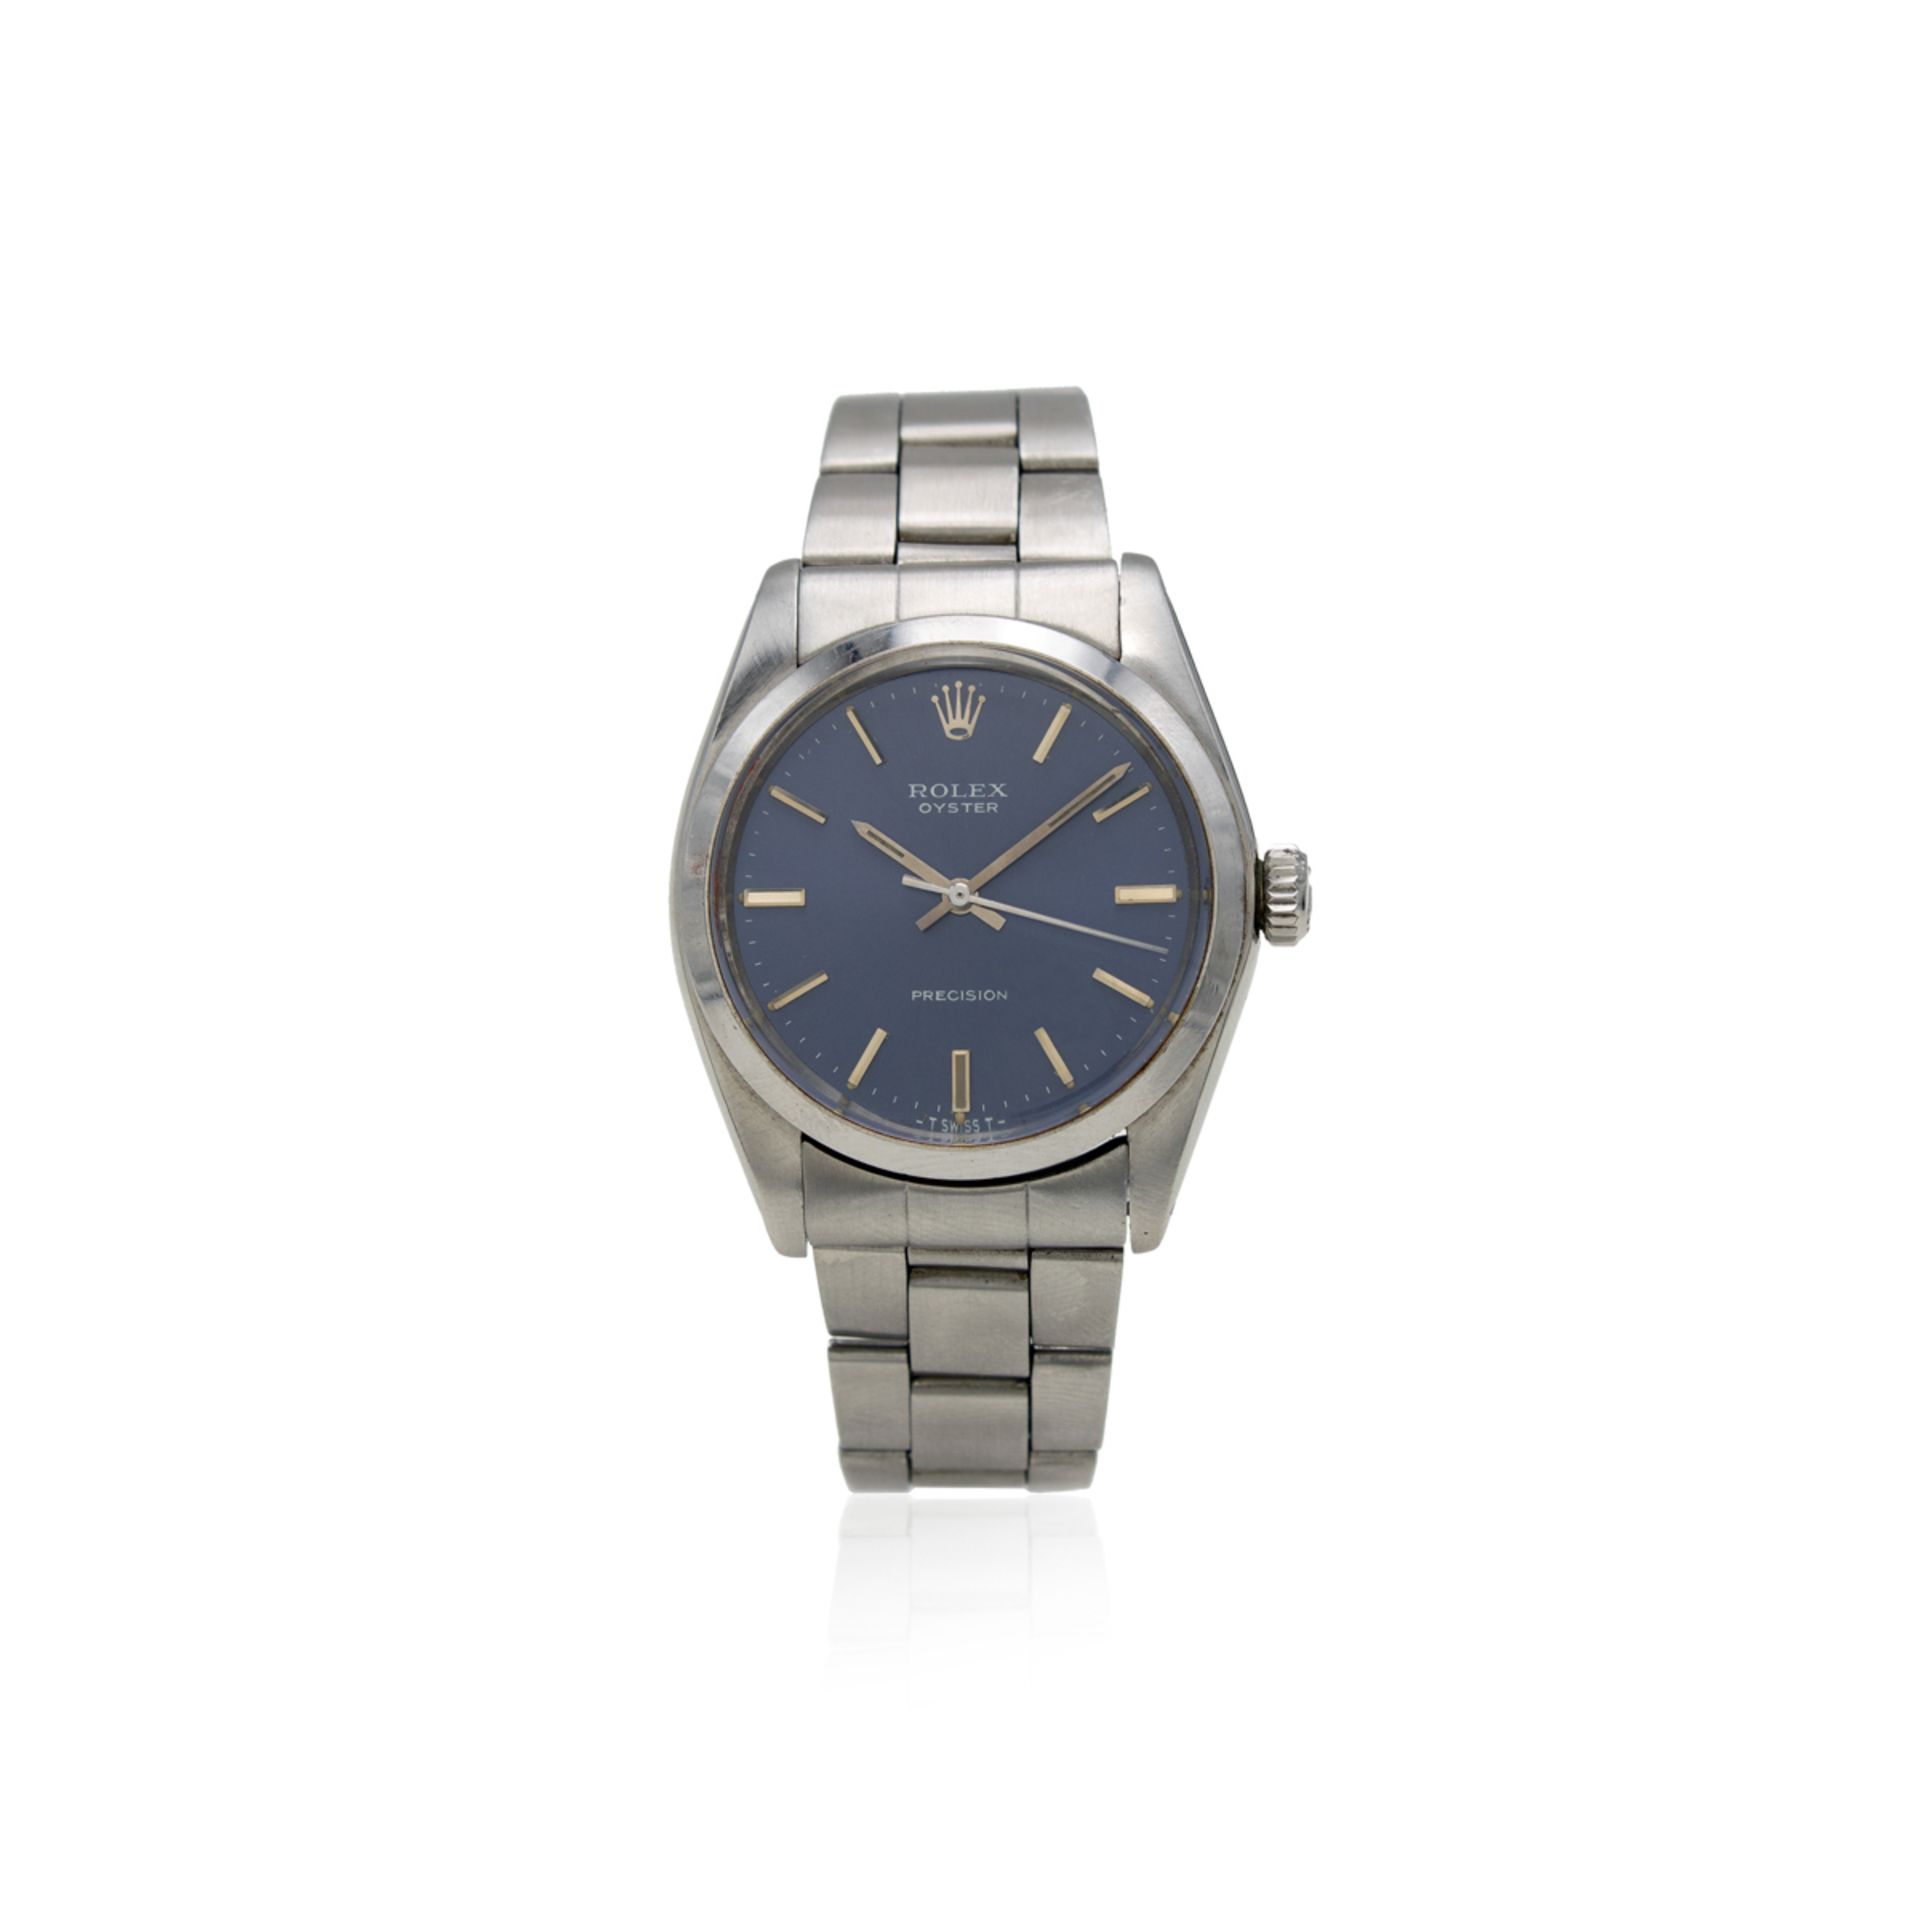 Rolex oyster Precision, vintage wristwatch